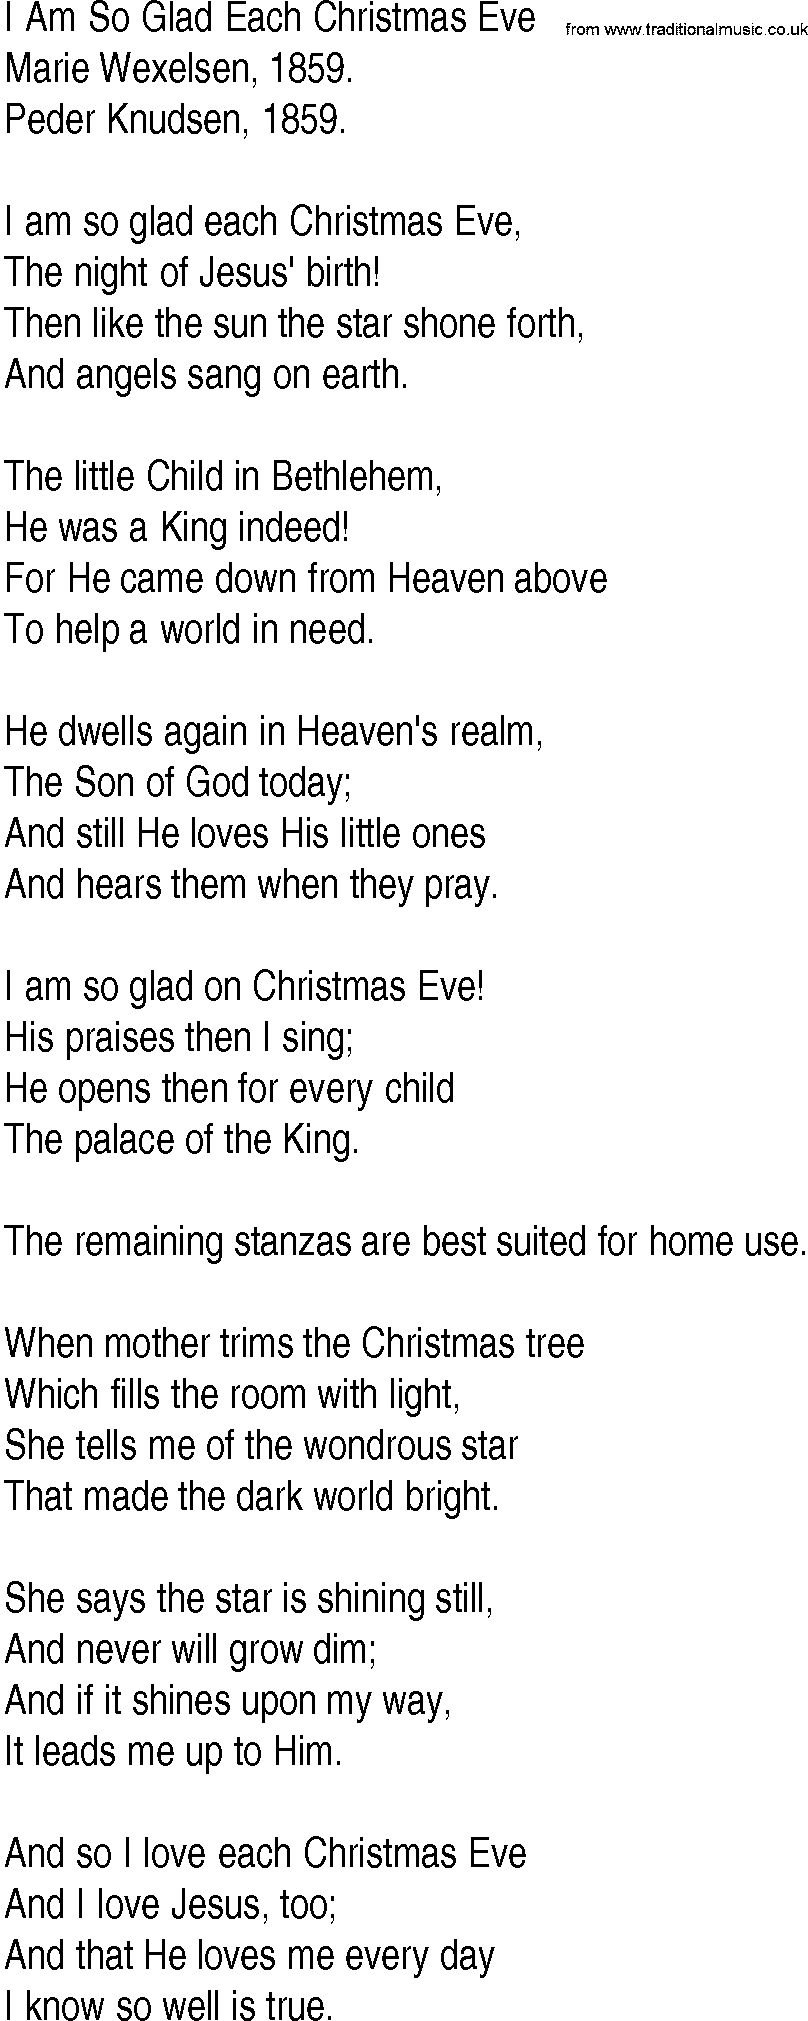 Hymn and Gospel Song: I Am So Glad Each Christmas Eve by Marie Wexelsen lyrics